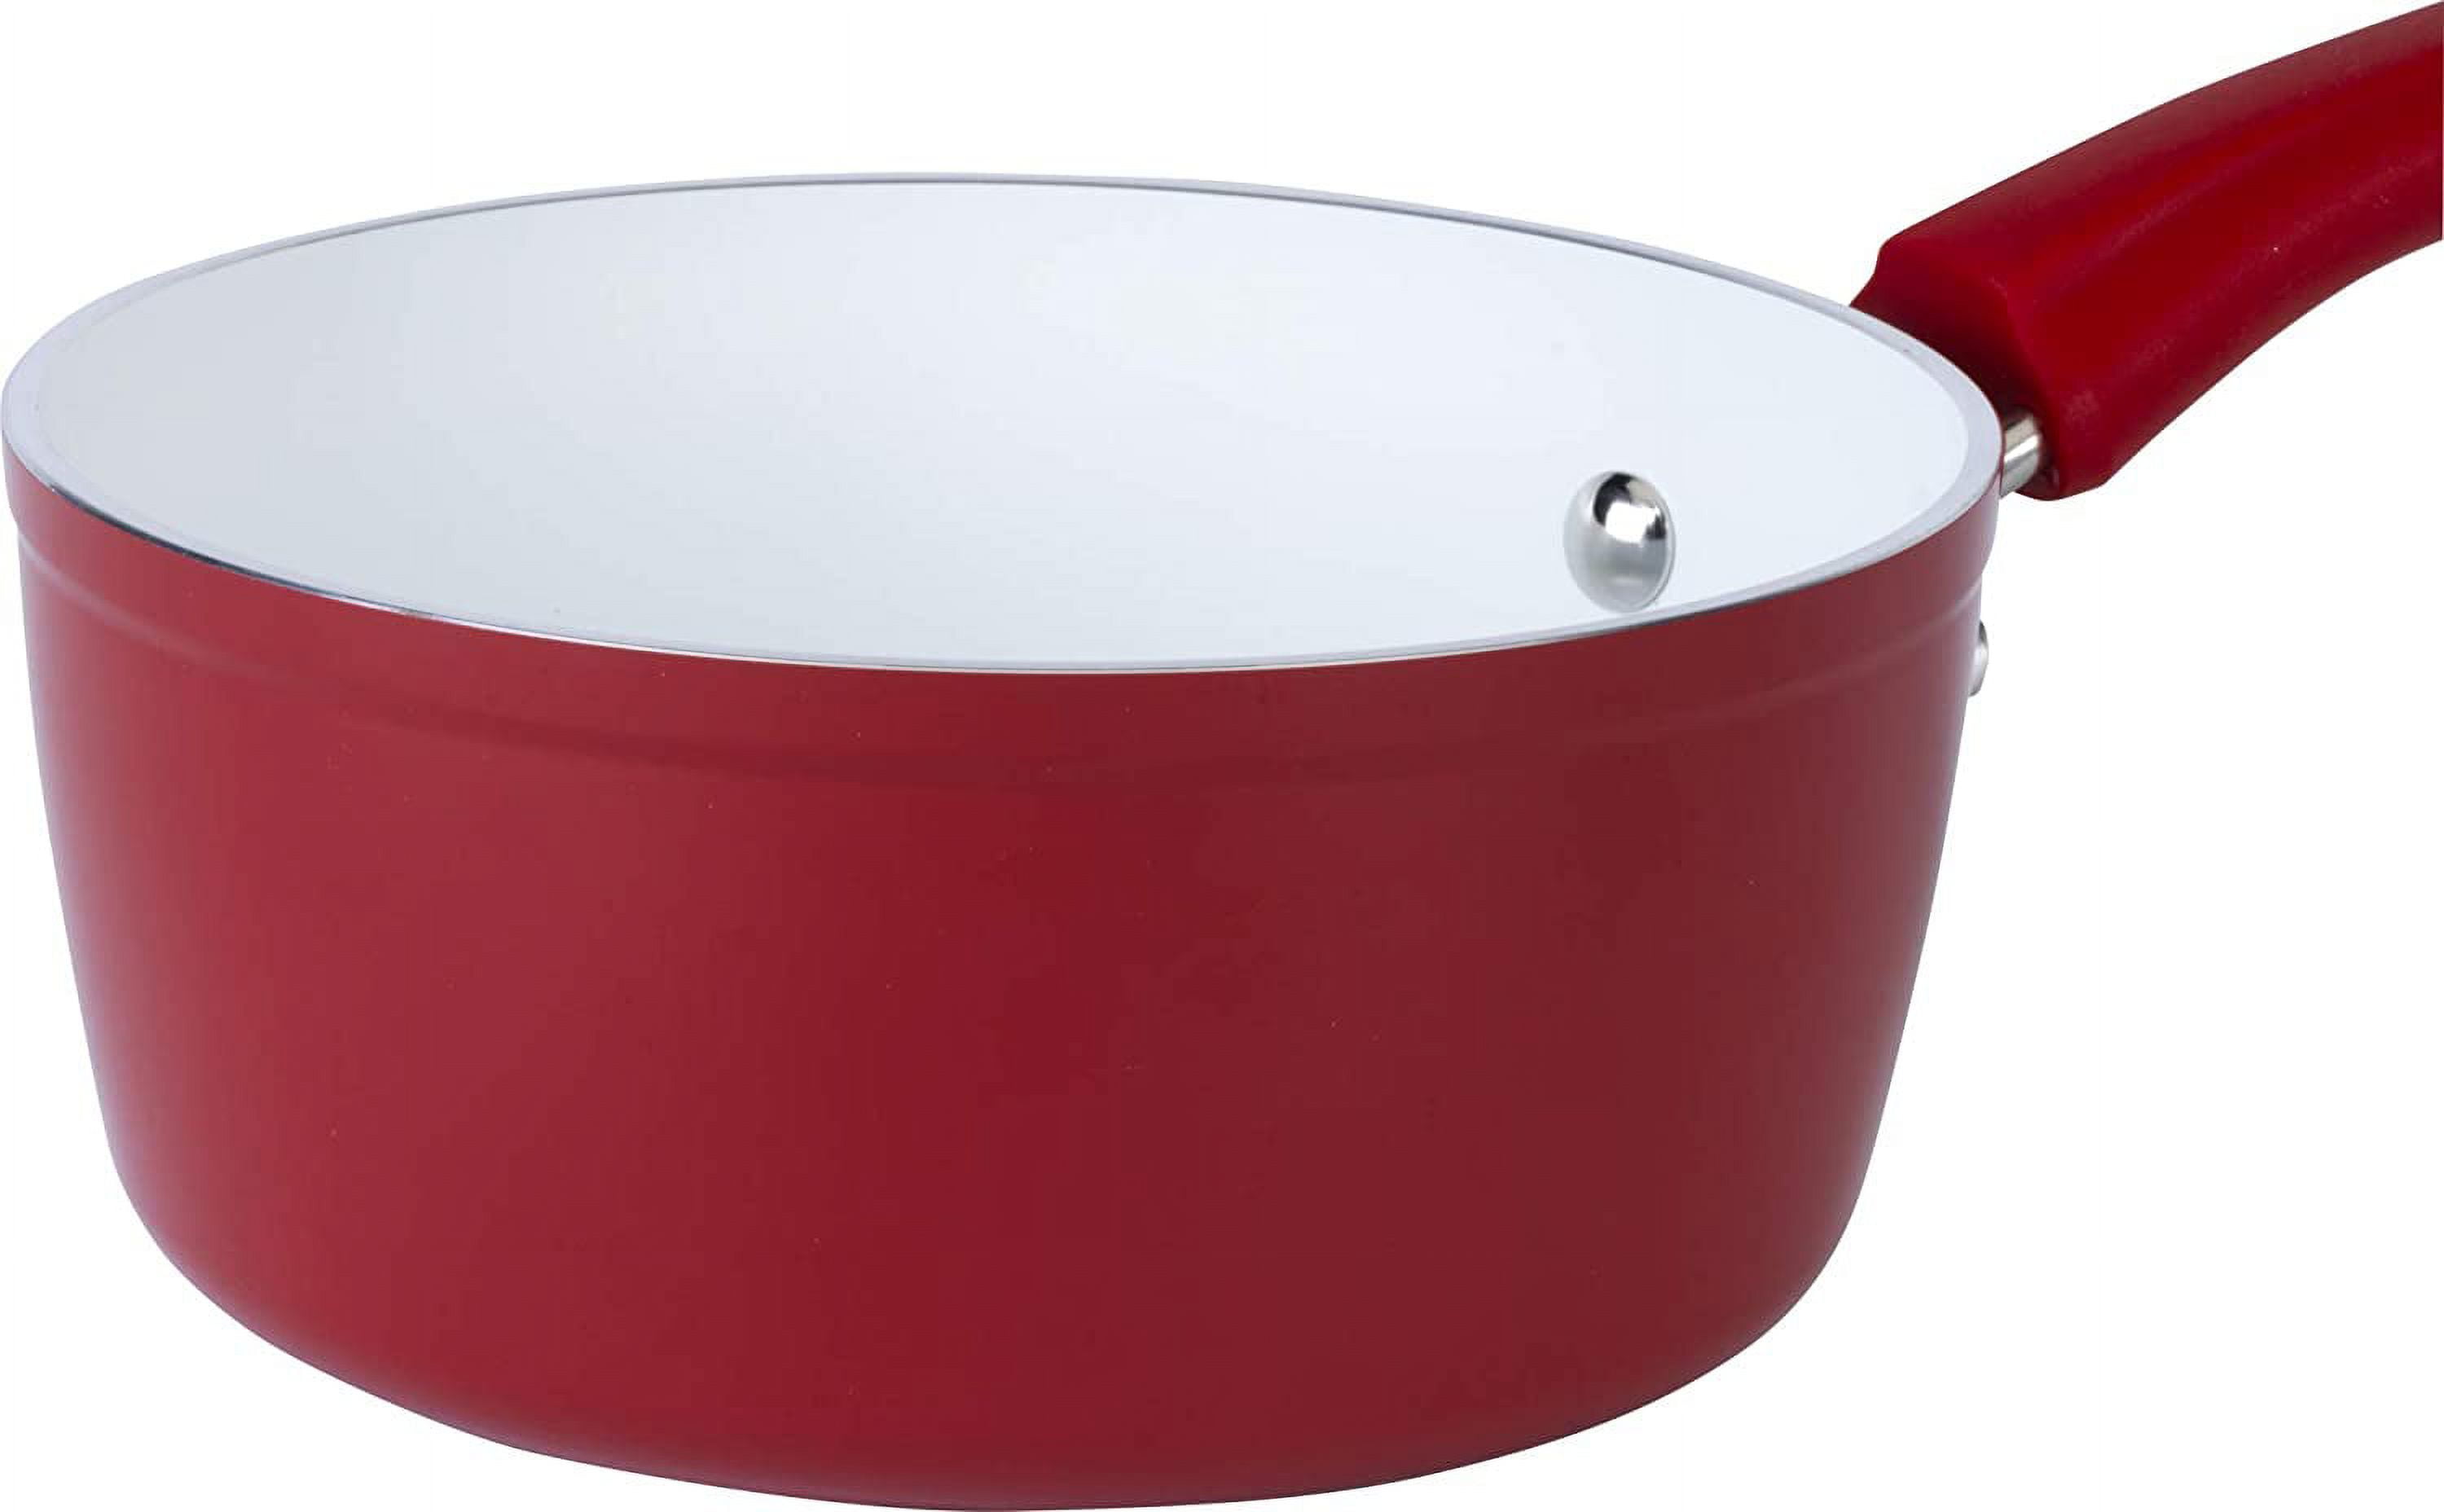 Bialetti Aeternum Red 2 QT Covered Sauce Pan- Nonstick Cookware, Ceramic  Inside